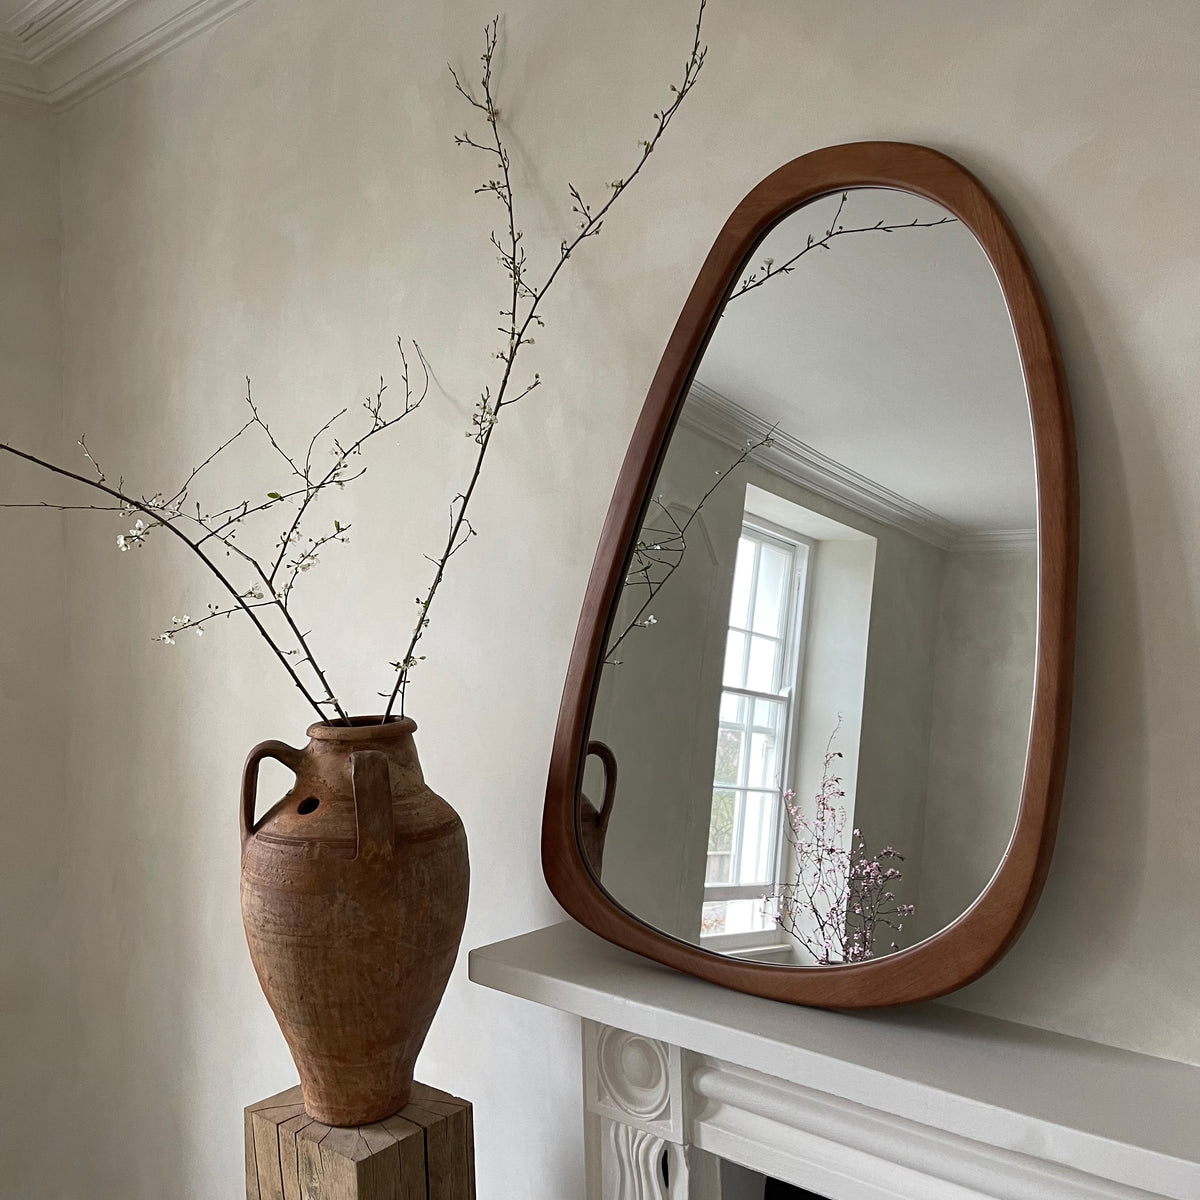 Organic irregular walnut-coloured wooden wall mirror leaning against wall